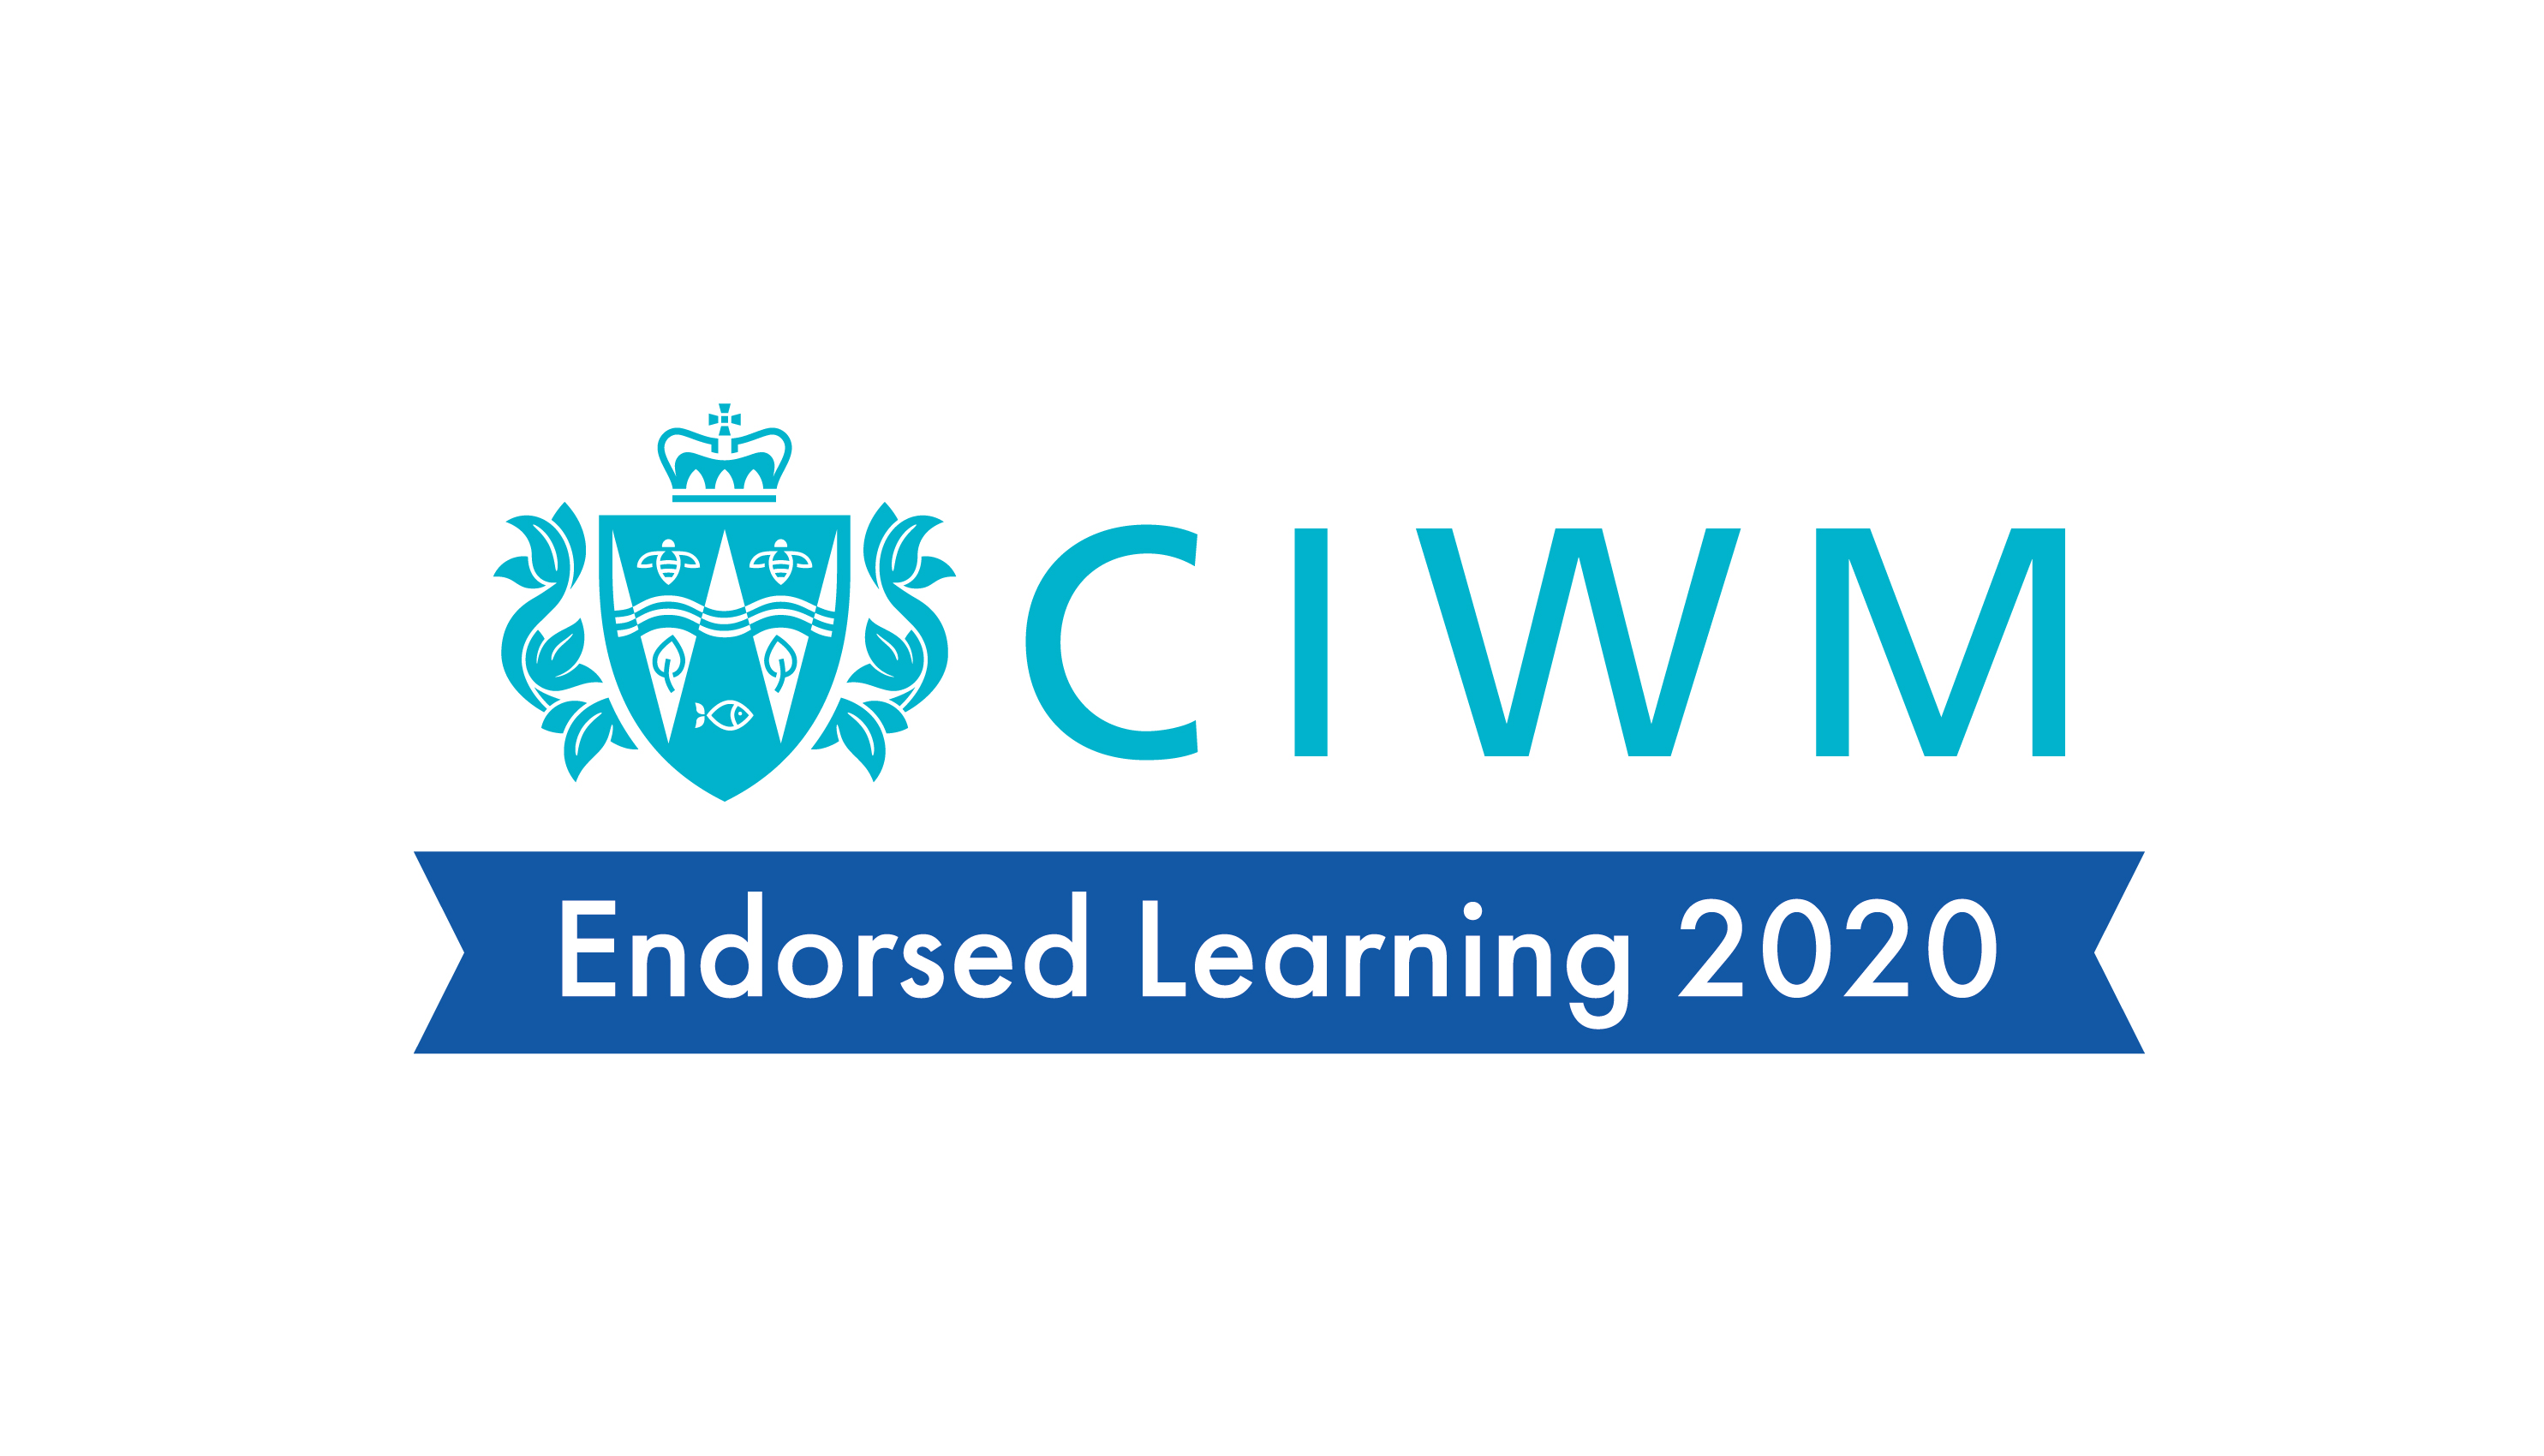 CIWM logo showing endorsement of course for 2020